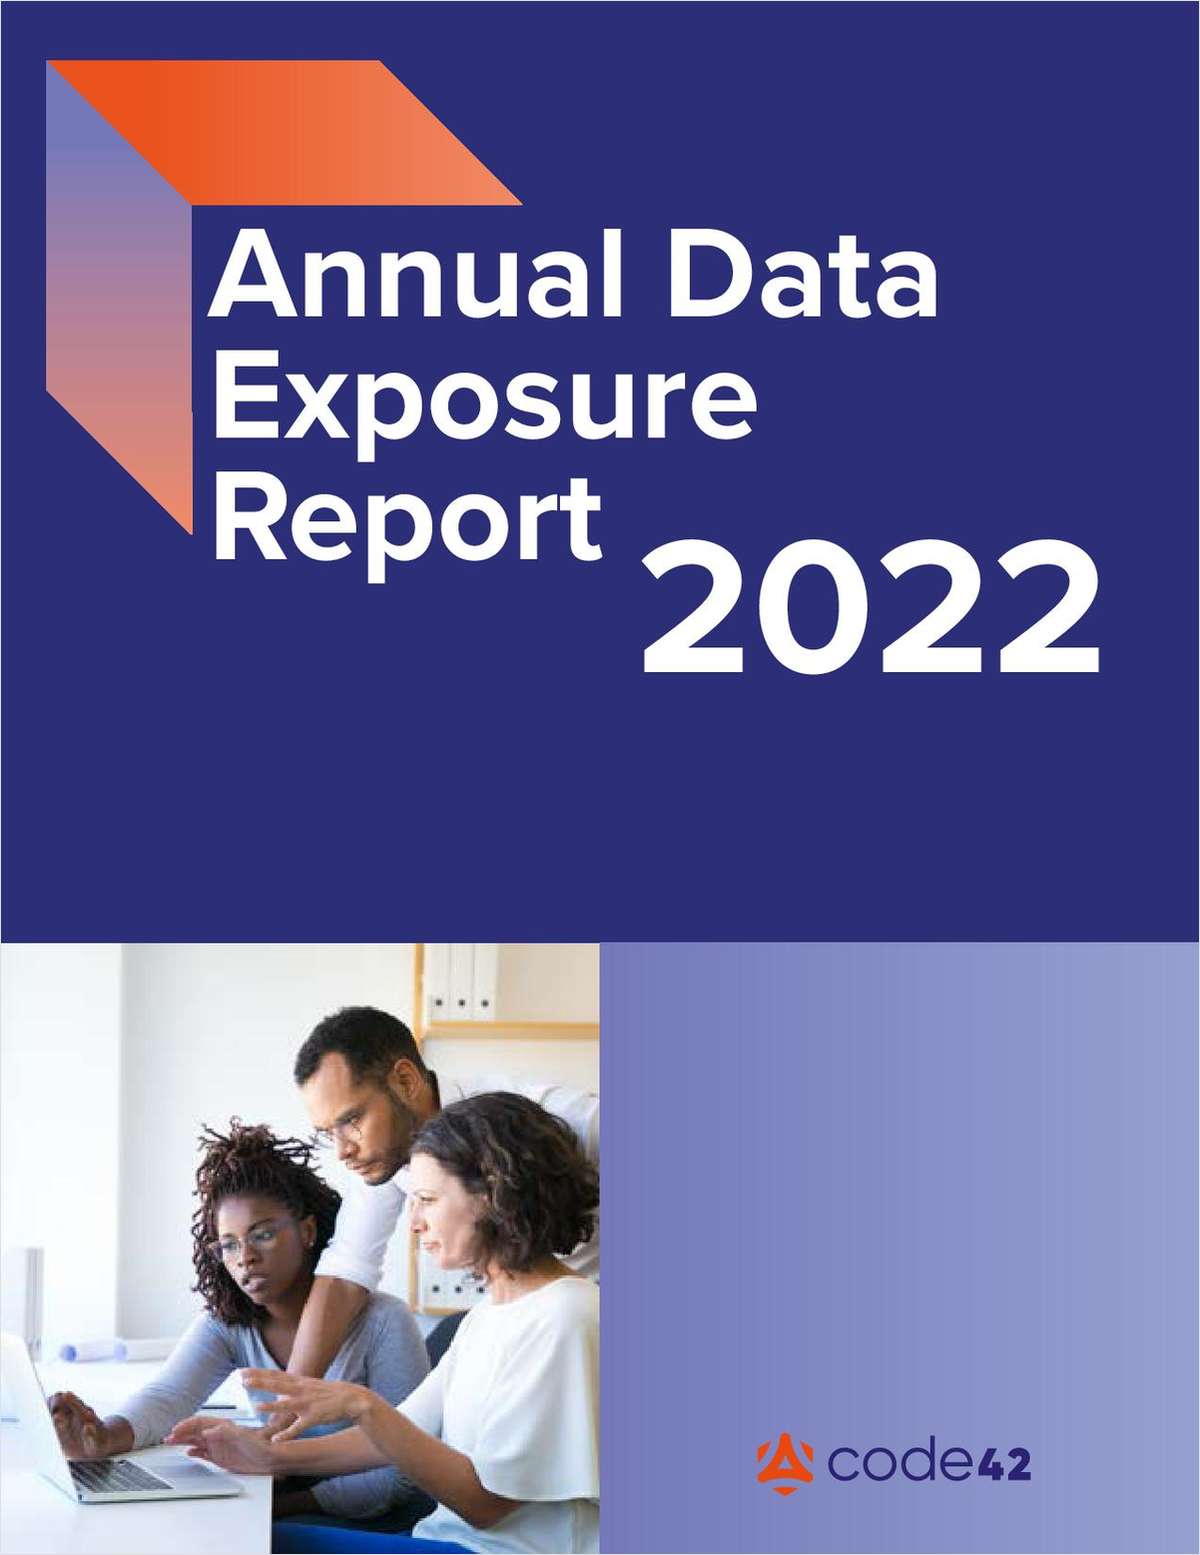 Code42 Annual Data Exposure Report